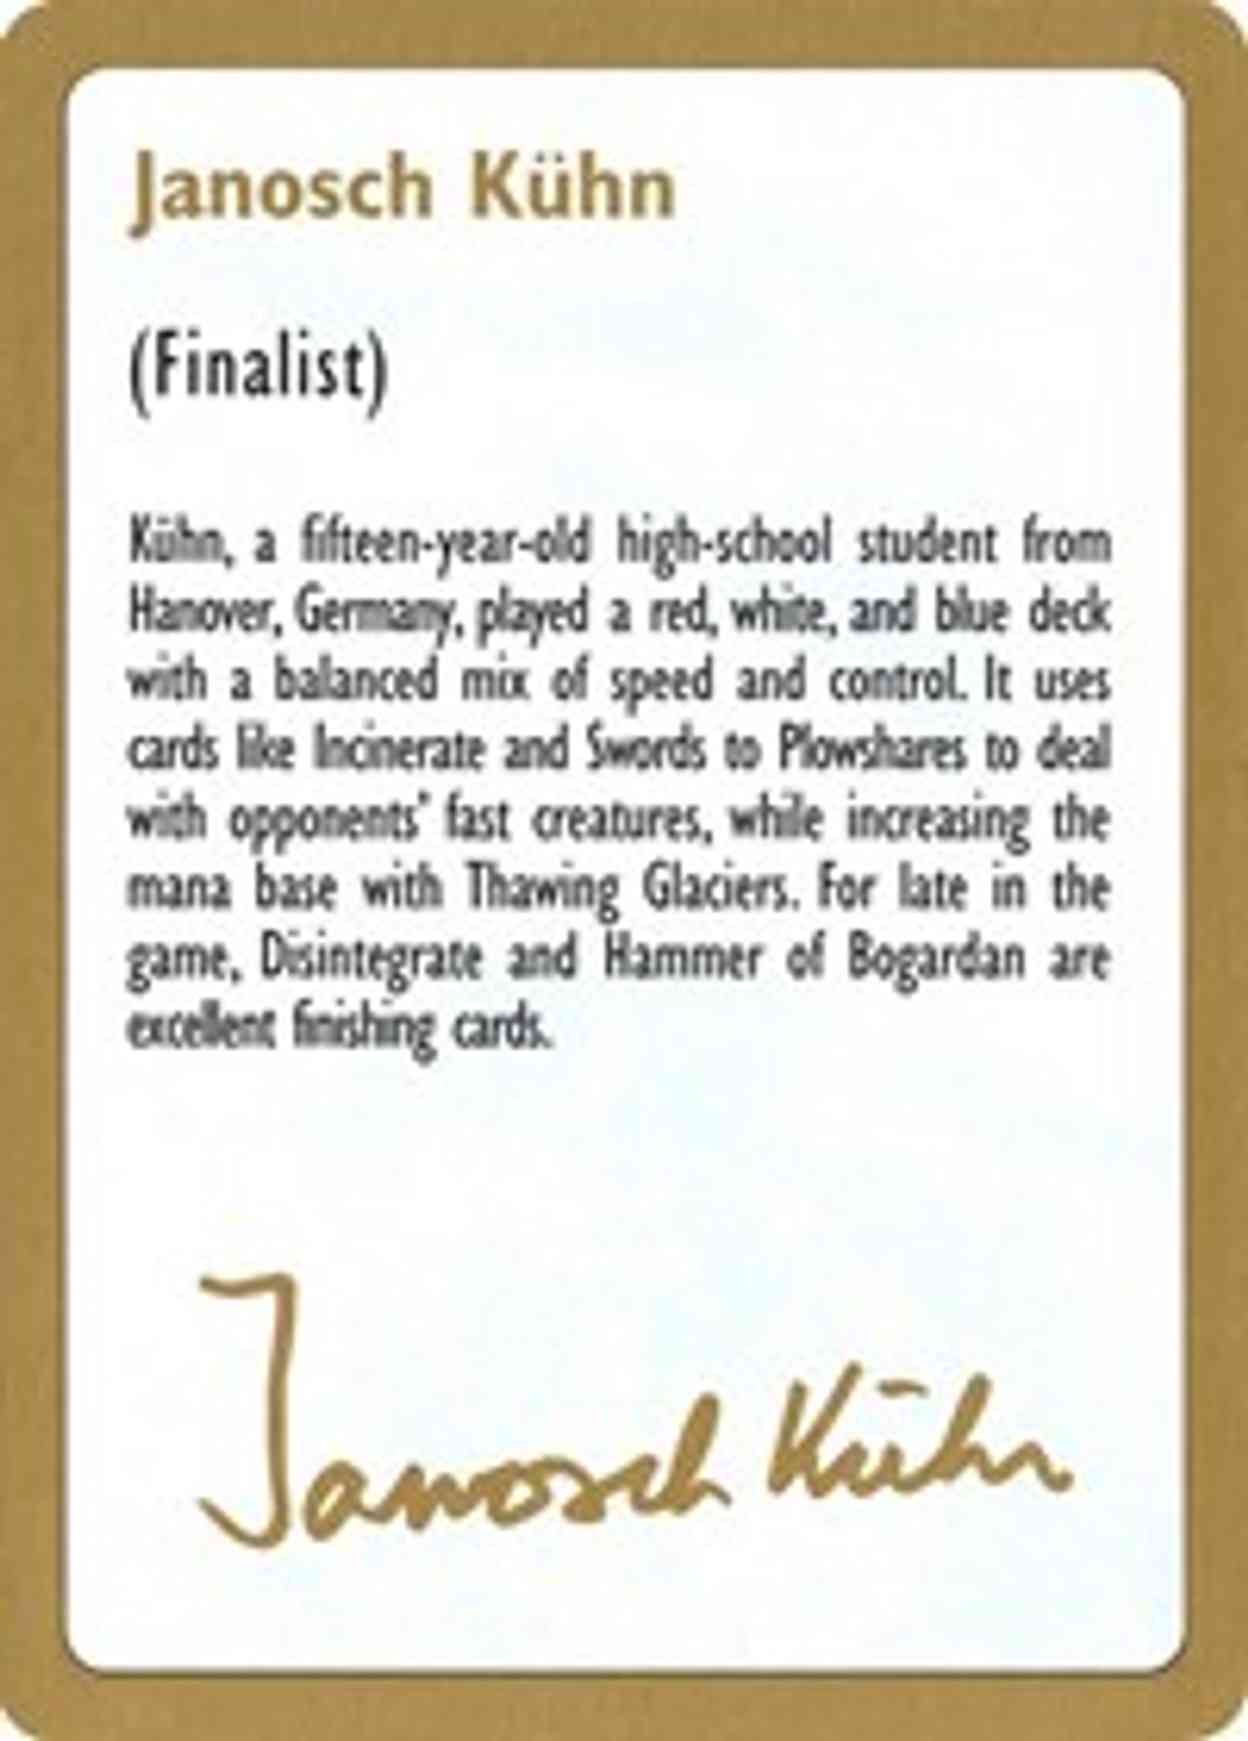 1997 Janosch Kuhn Biography Card magic card front